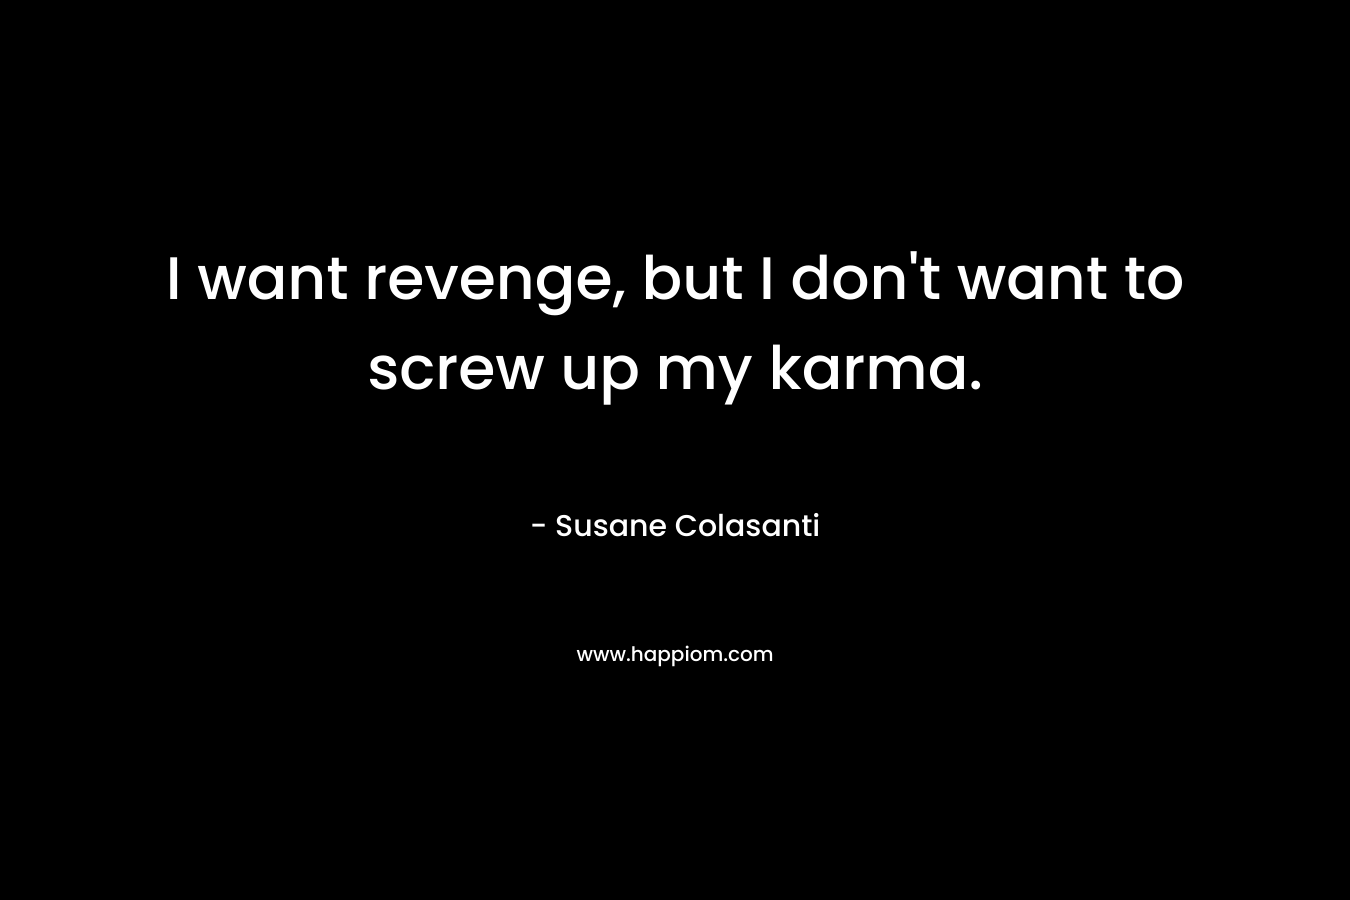 I want revenge, but I don’t want to screw up my karma. – Susane Colasanti